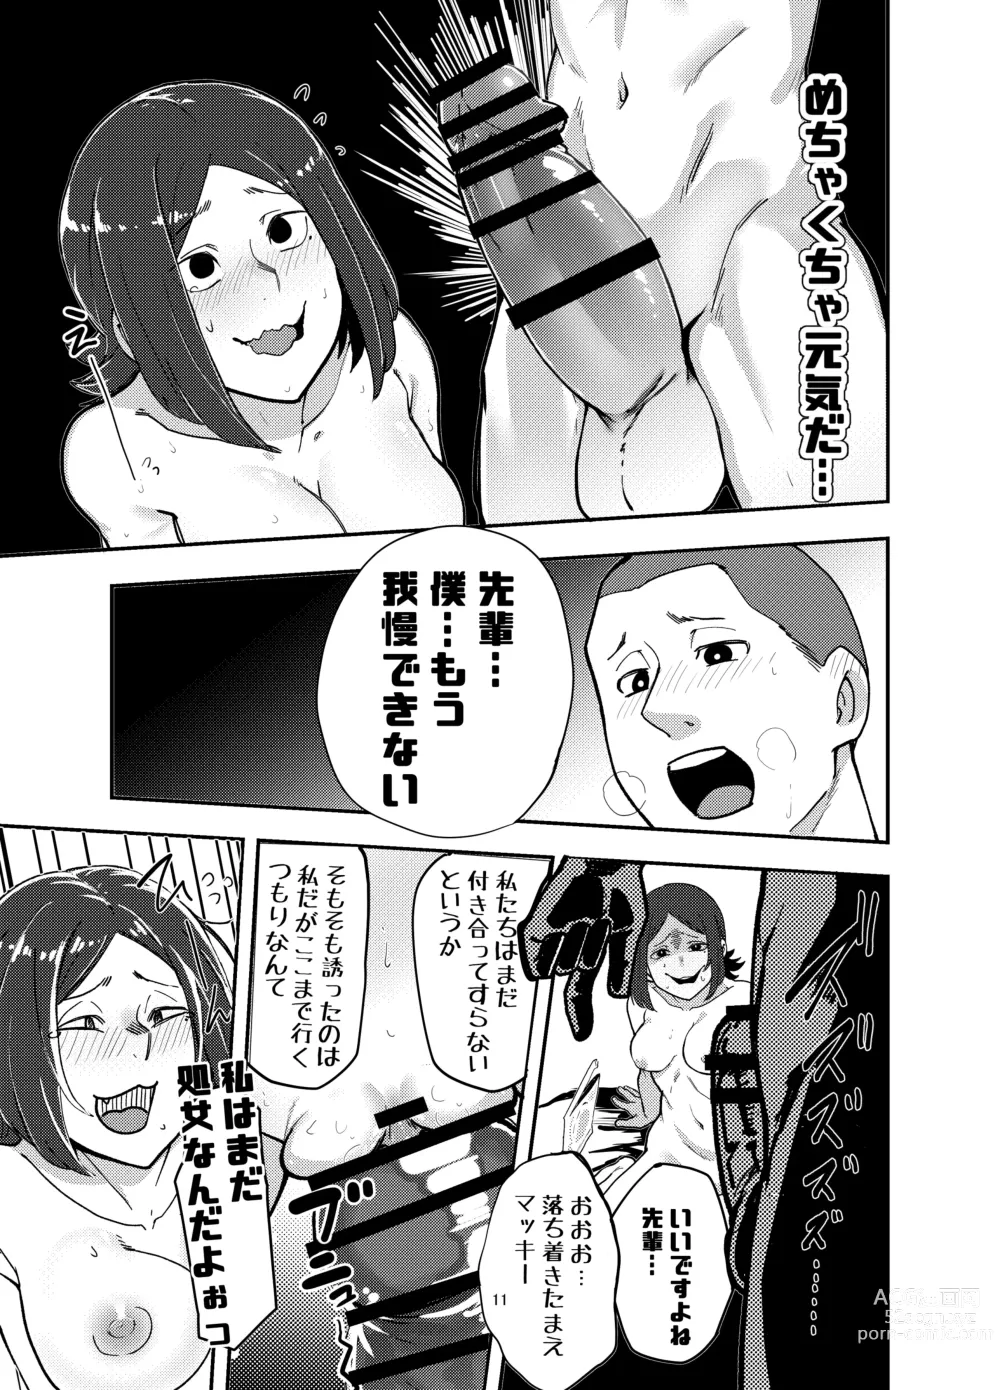 Page 11 of doujinshi Kamera o Tsukatte Odoseba Iijan ♪